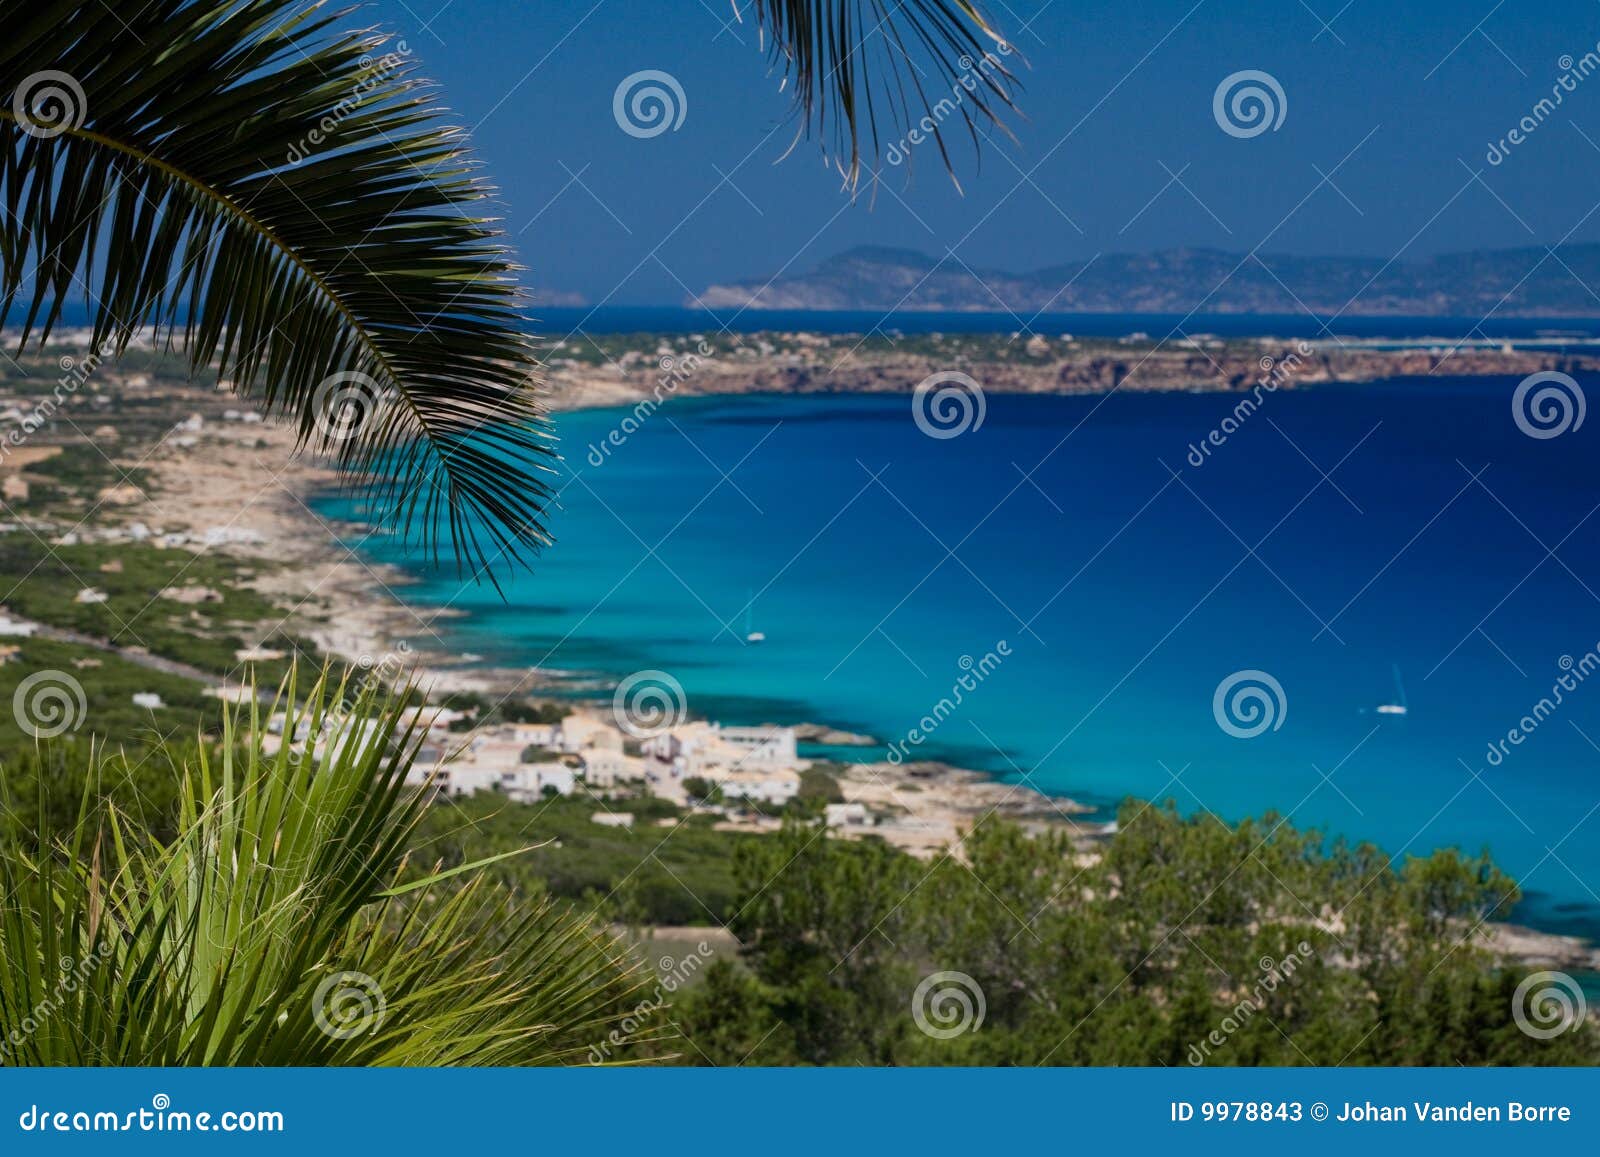 formentera coast and beaches